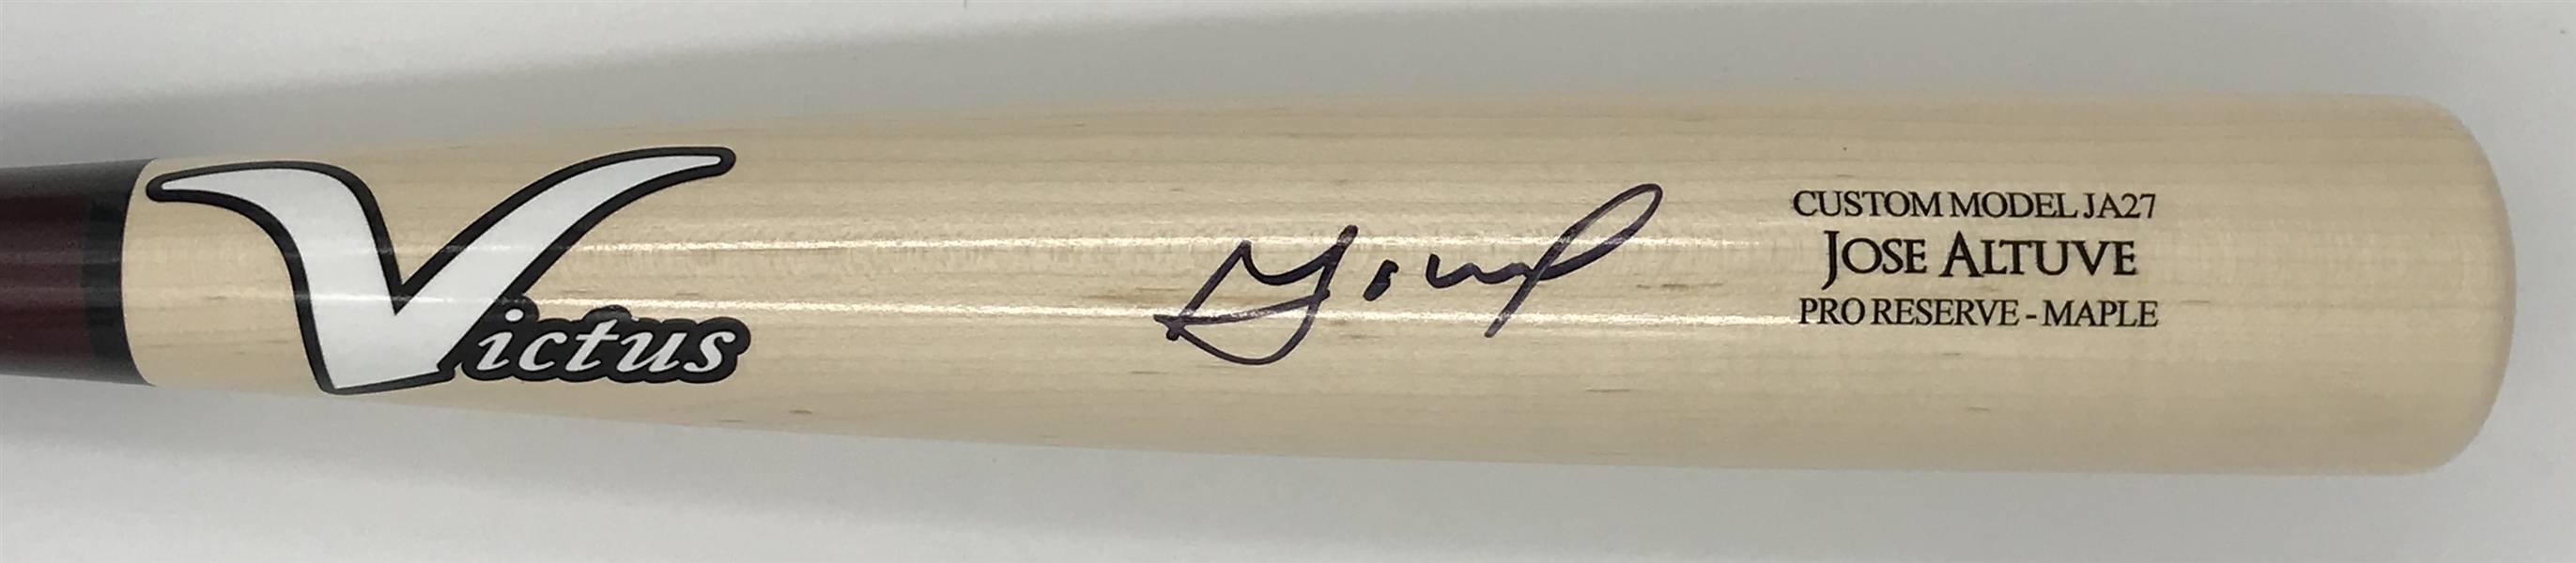 Jose Altuve Astros Autographed Game Model Victus Bat MLB Certified